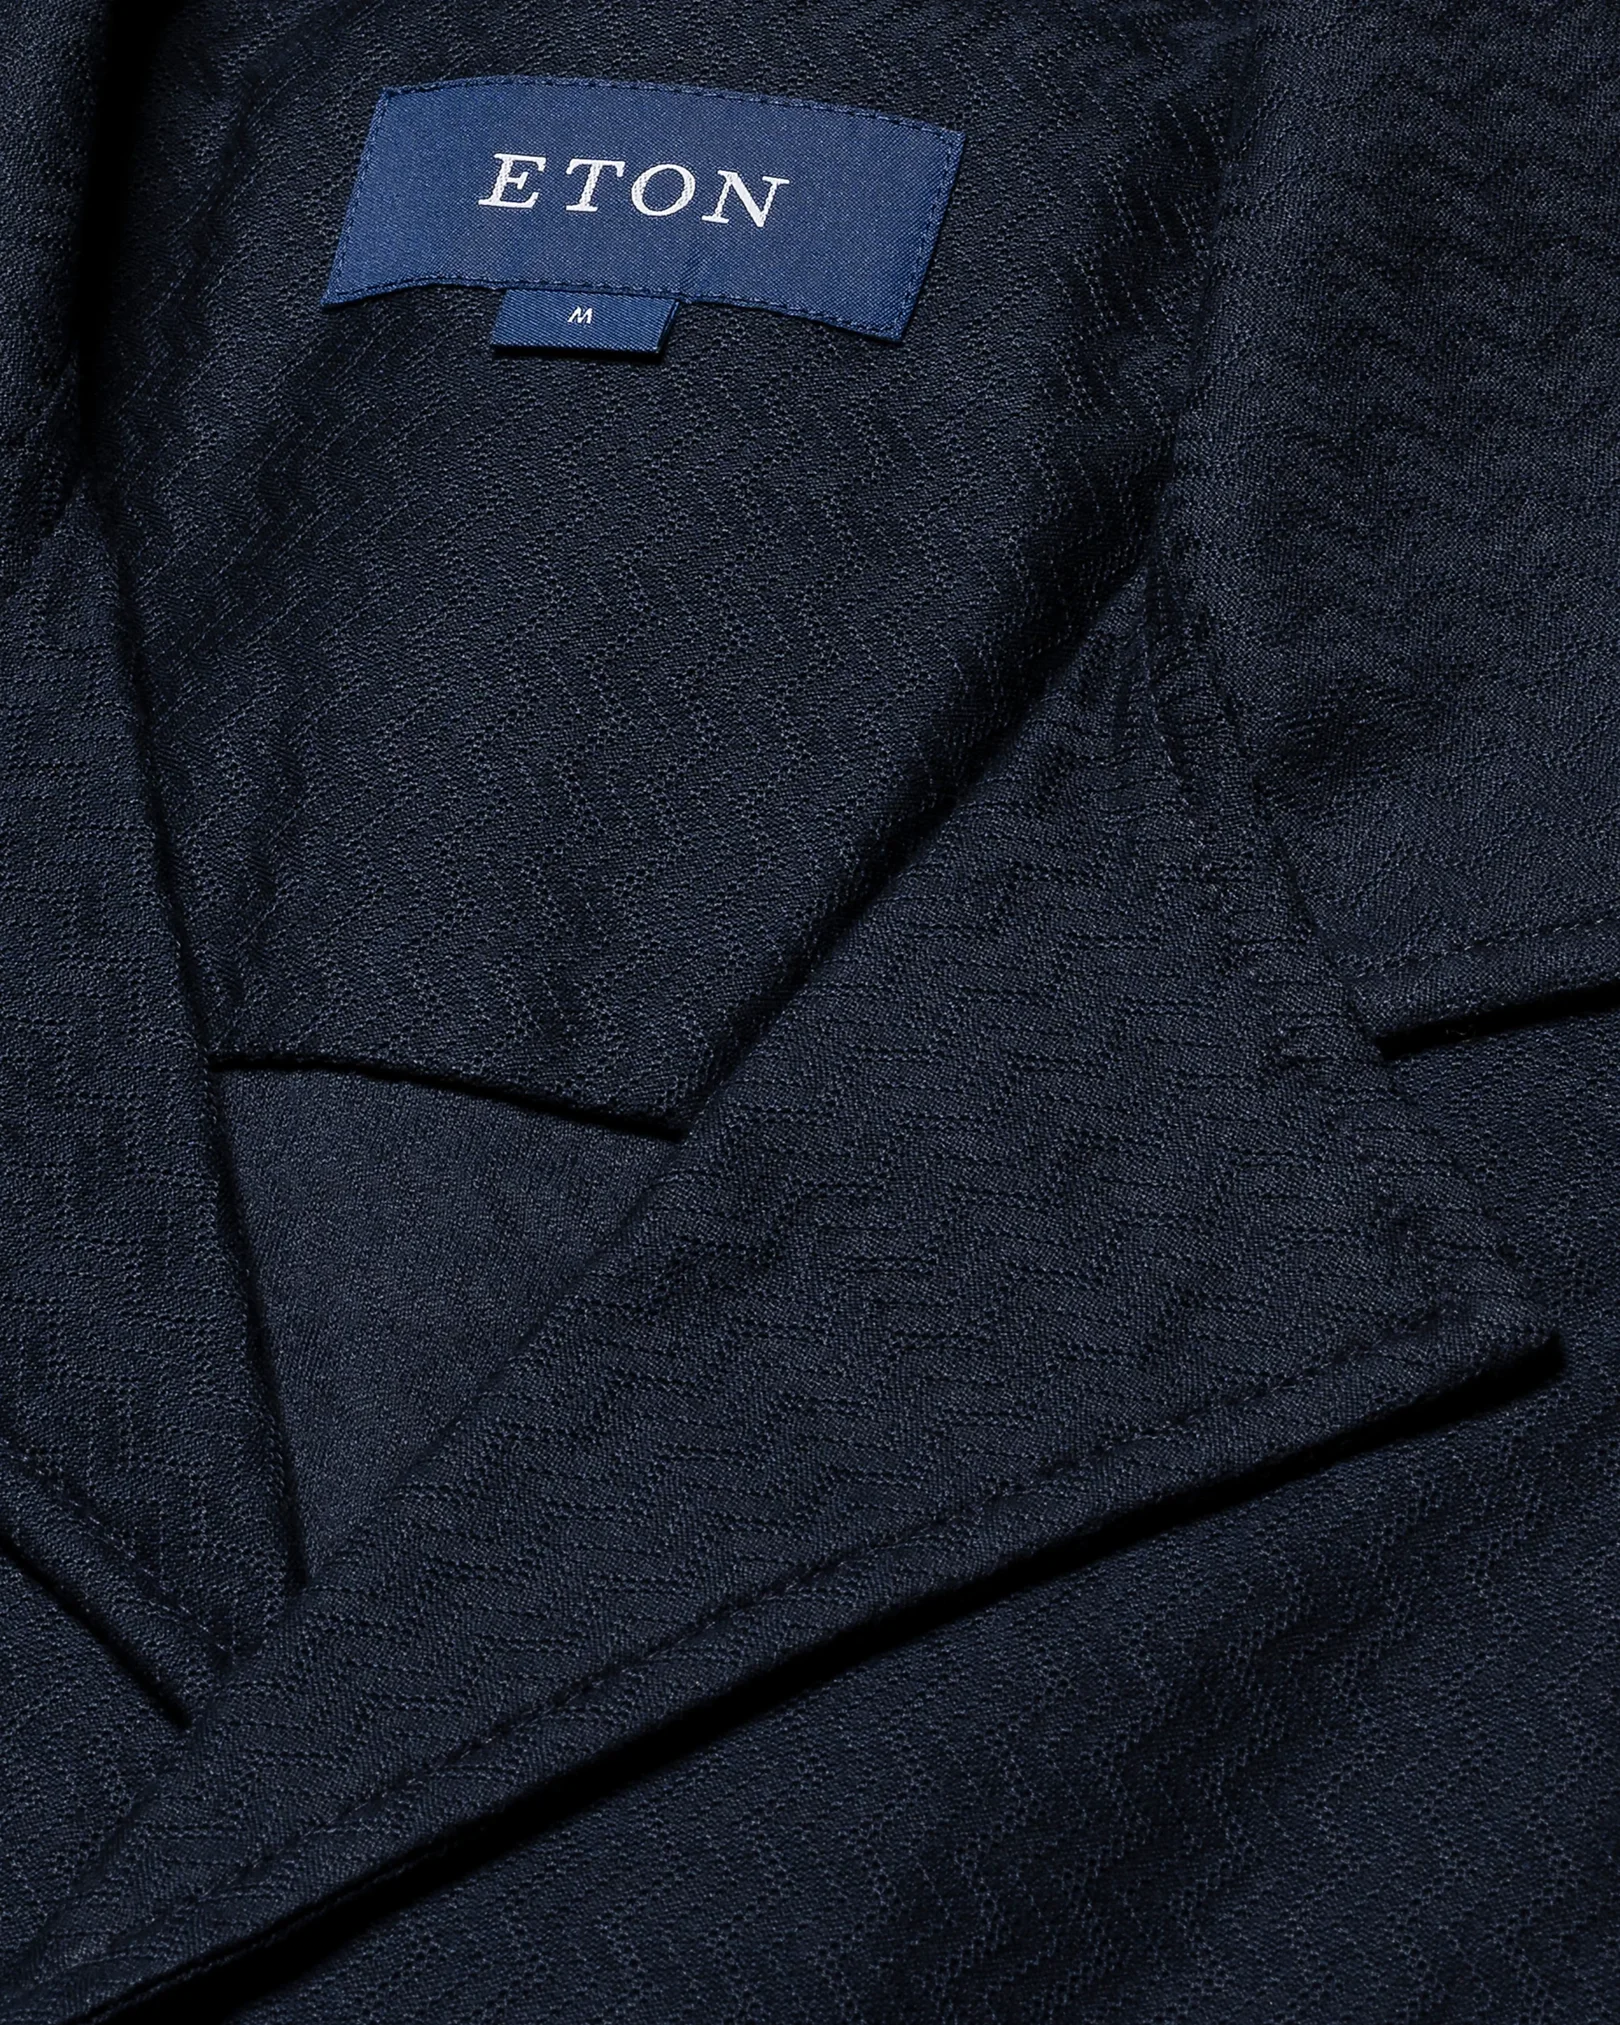 Eton - navy blue knitted